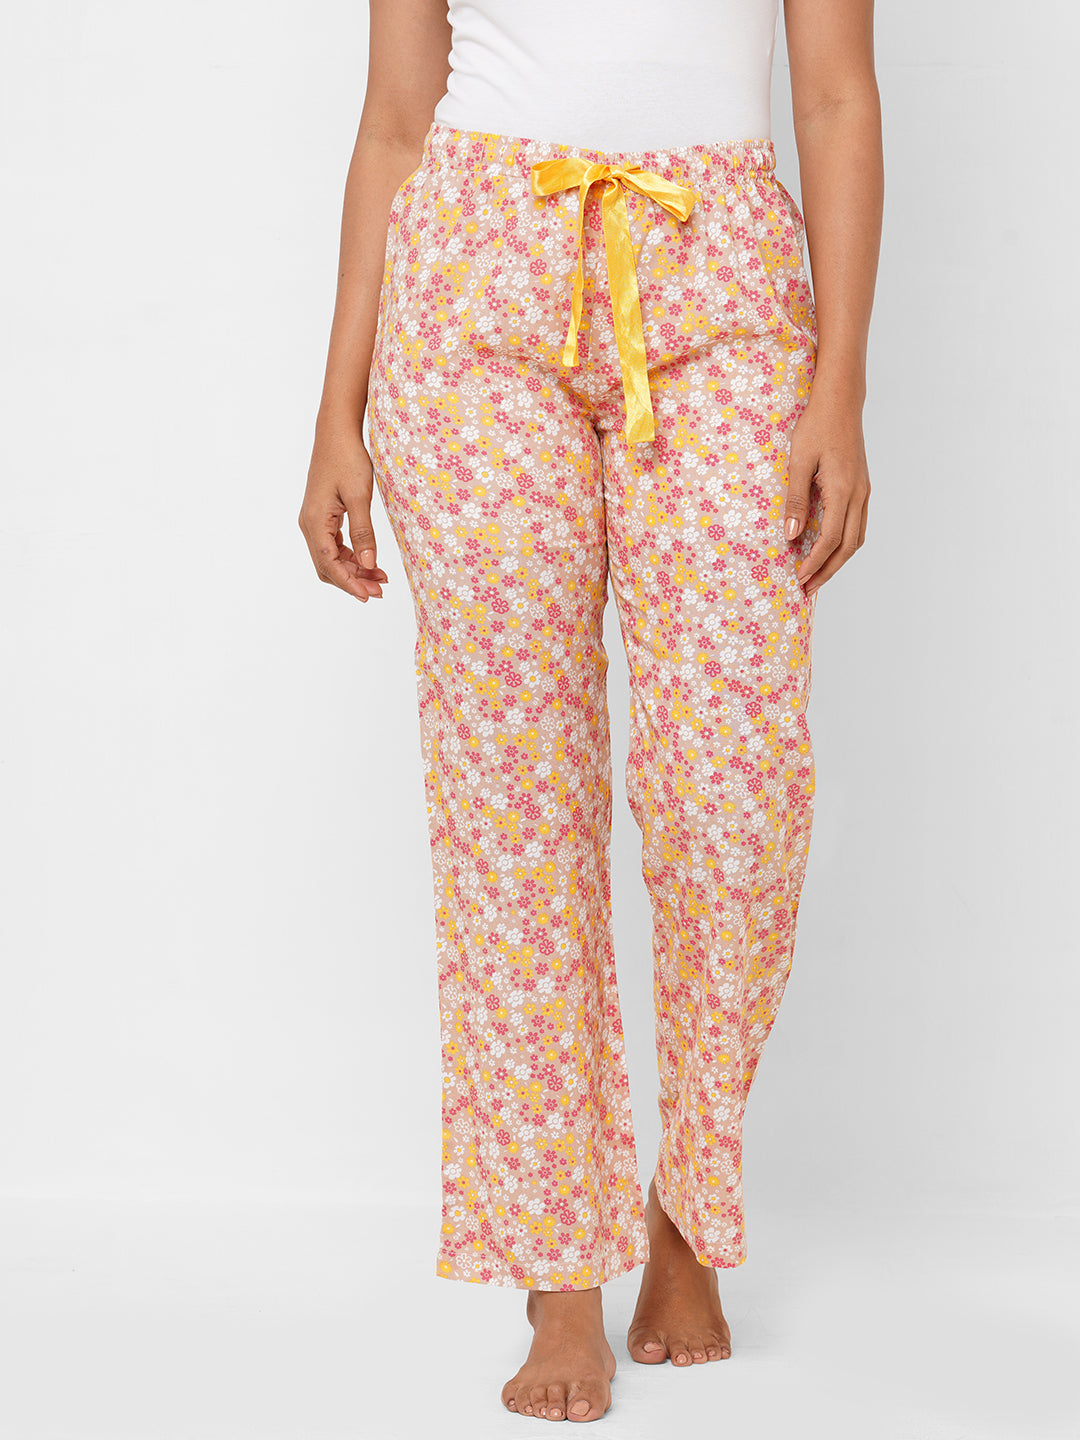 Buy JINSHI Womenââ‚¬â„¢s Modal Pajama Pants Sleepwear Soft Pajama Bottoms  Lounge Pants with Pockets(S,Wine Red/Light Purple/Black) at Amazon.in